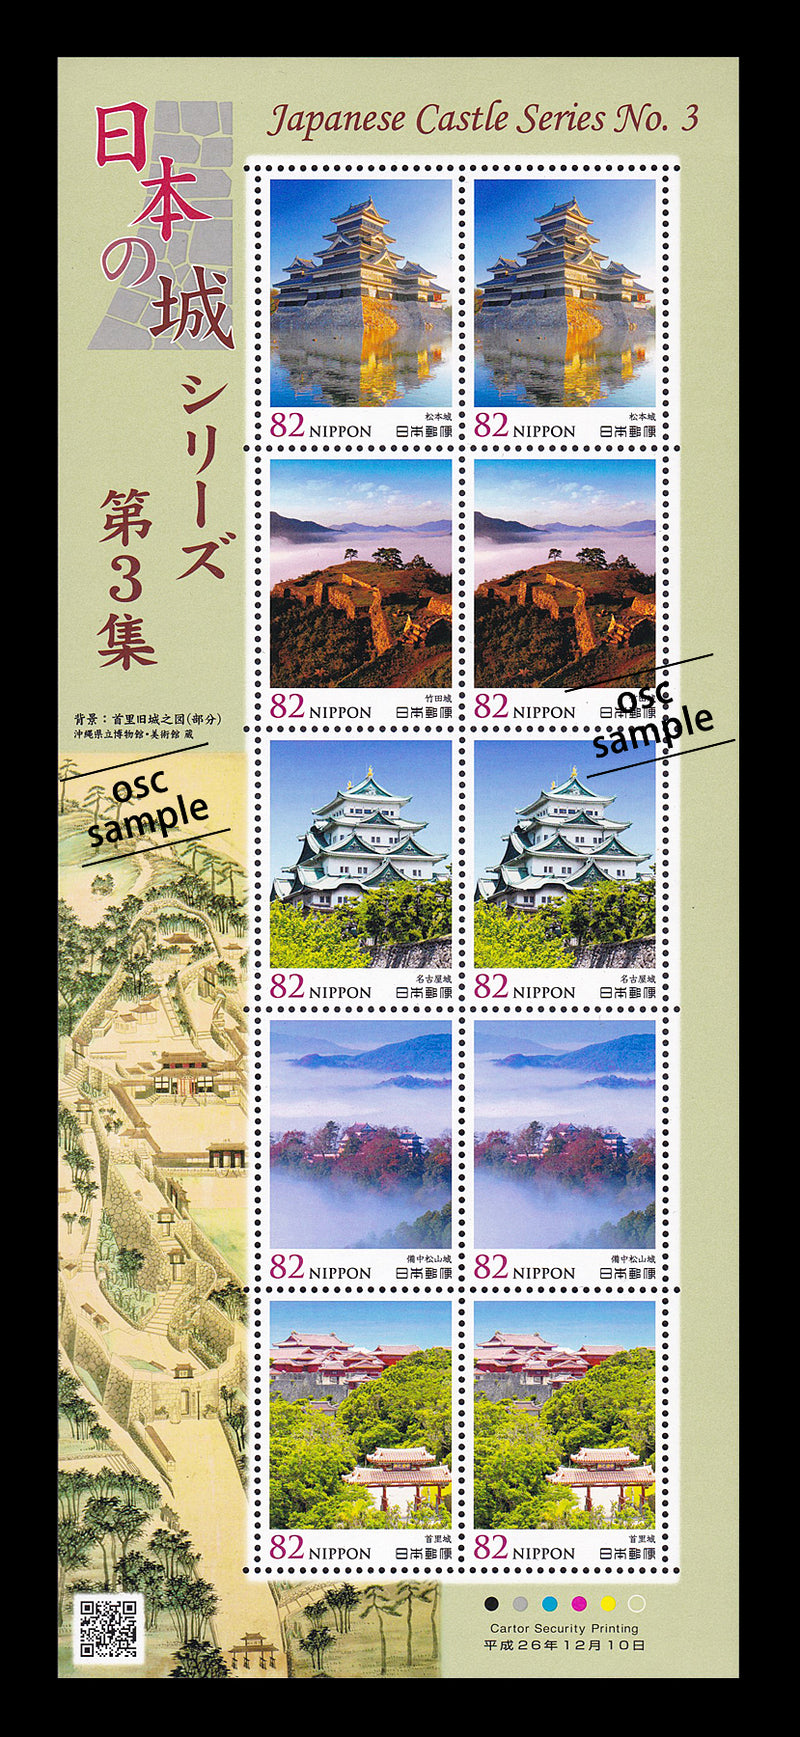 Japanese Castle Series No.3